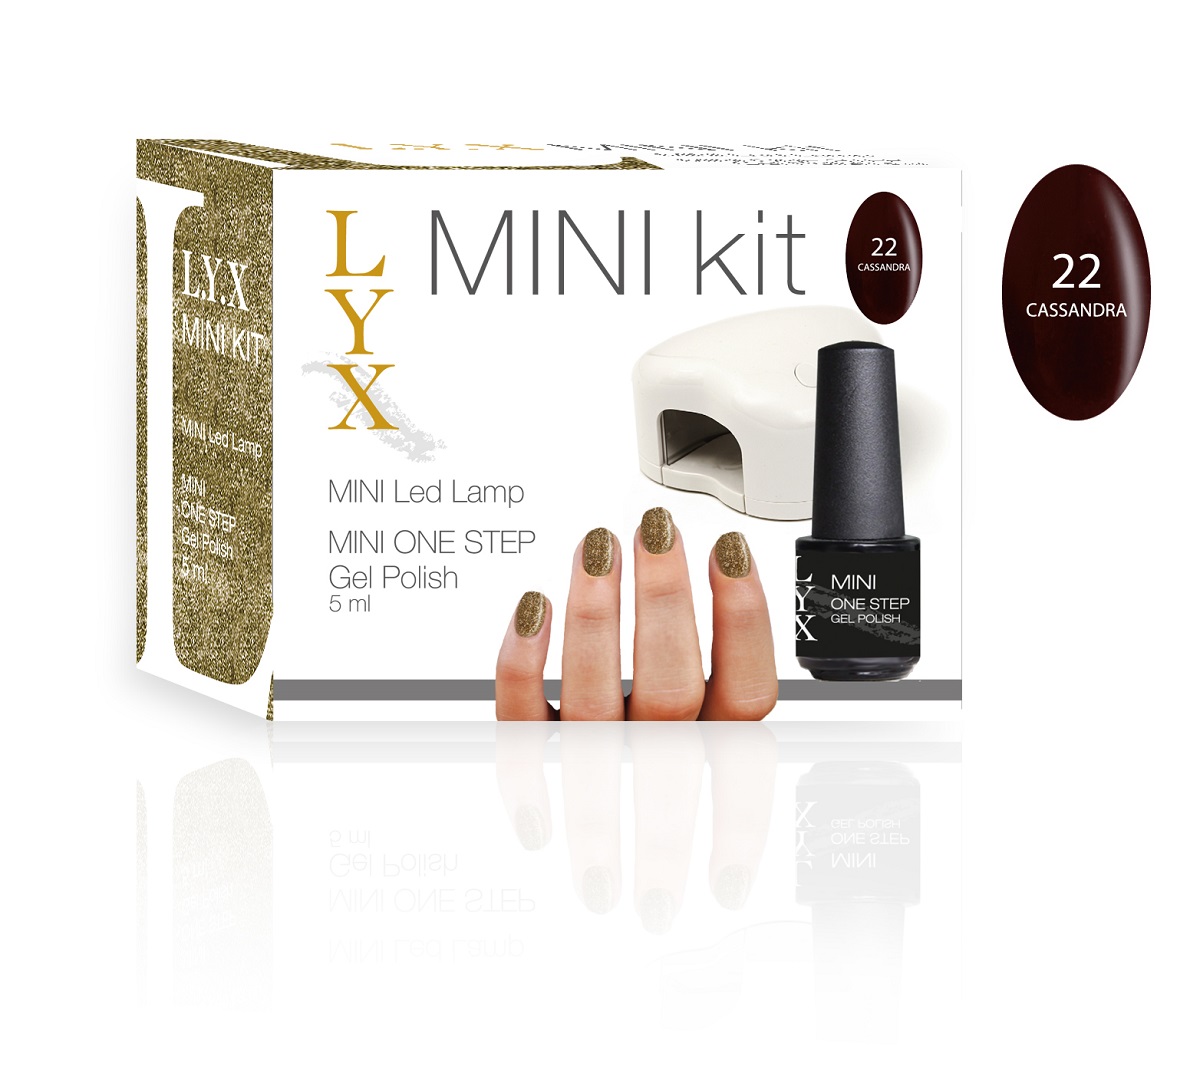 LYX Cosmetics Minikit Cassandra